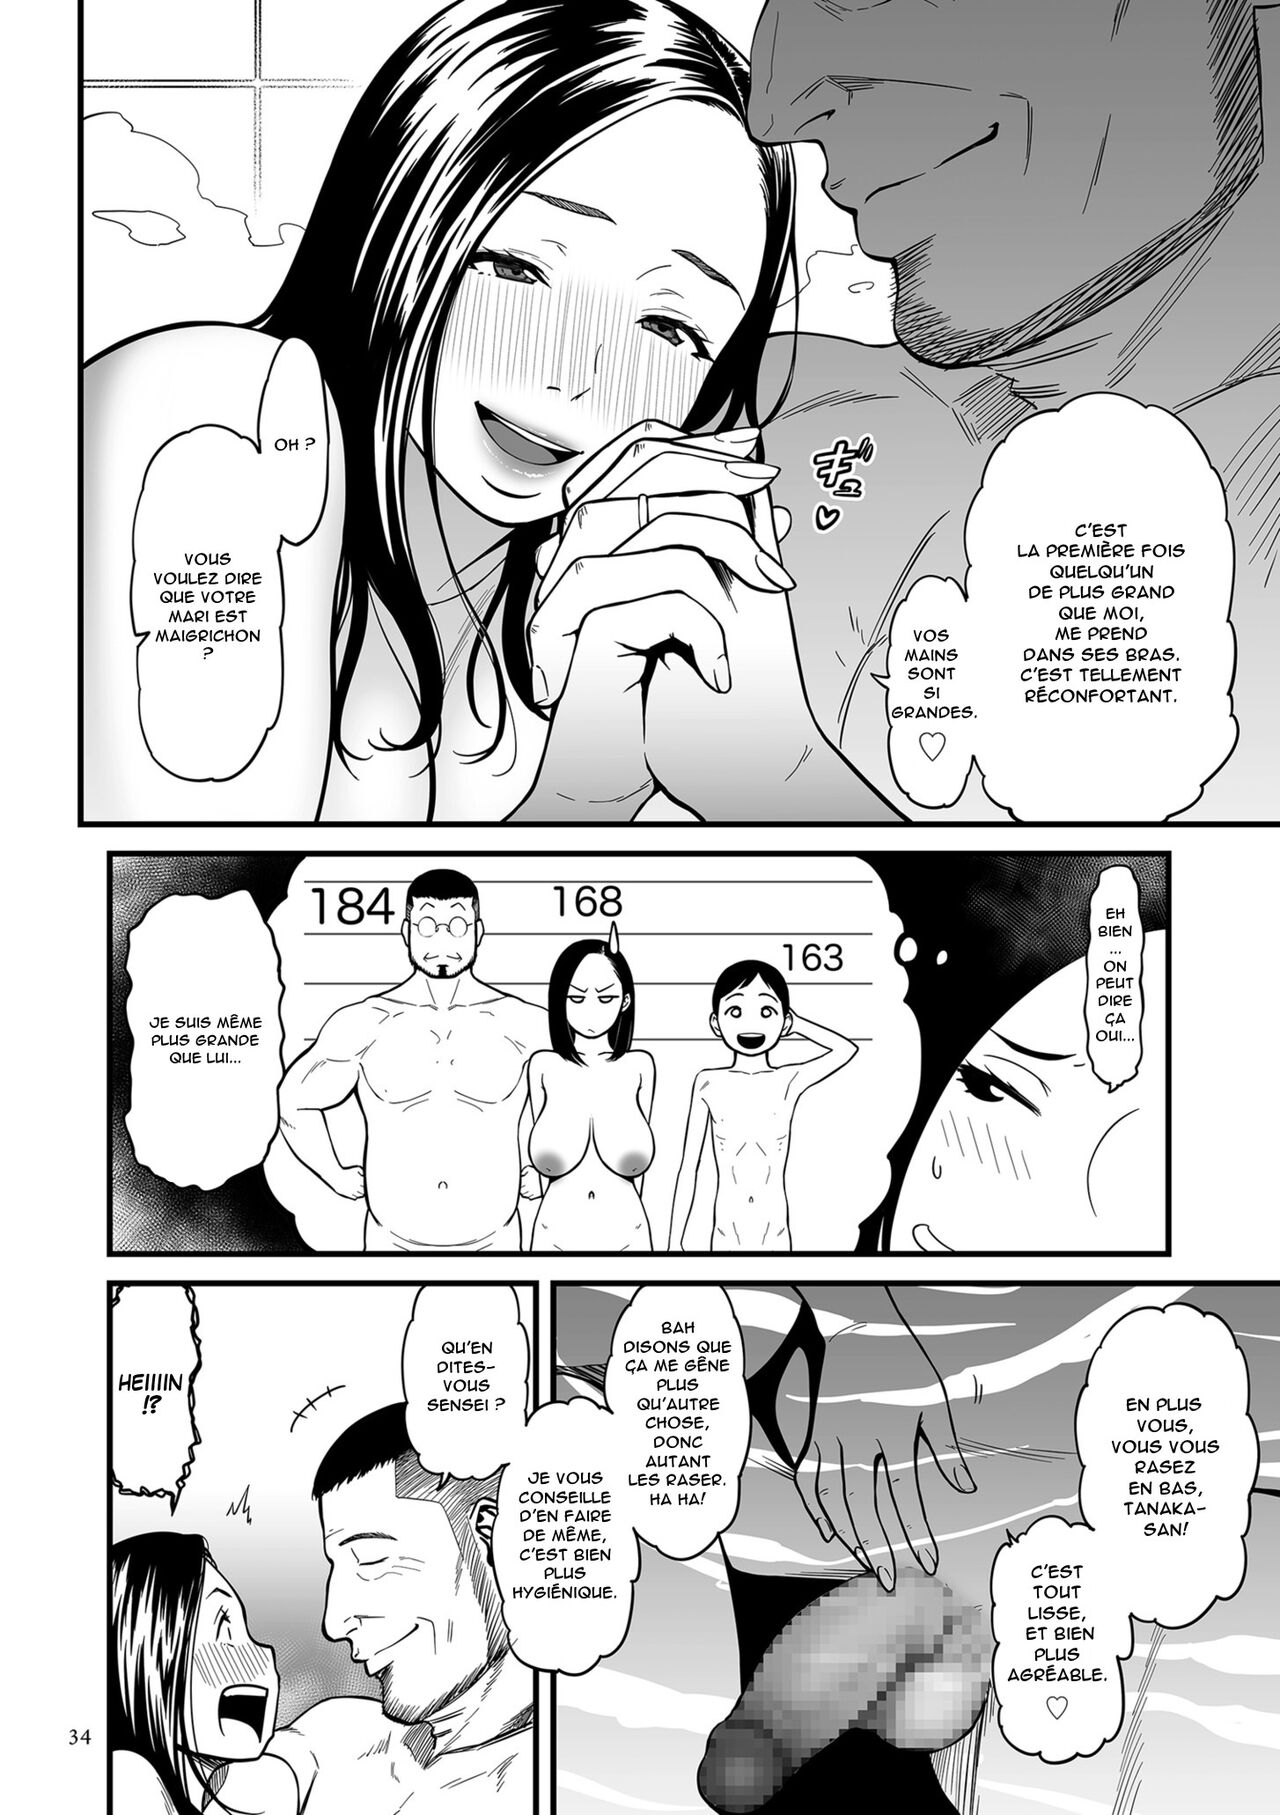 Onna Eromangaka ga Inran da nante Gensou ja nai?  Is It Not a Fantasy That The Female Erotic Mangaka Is a Pervert? numero d'image 34